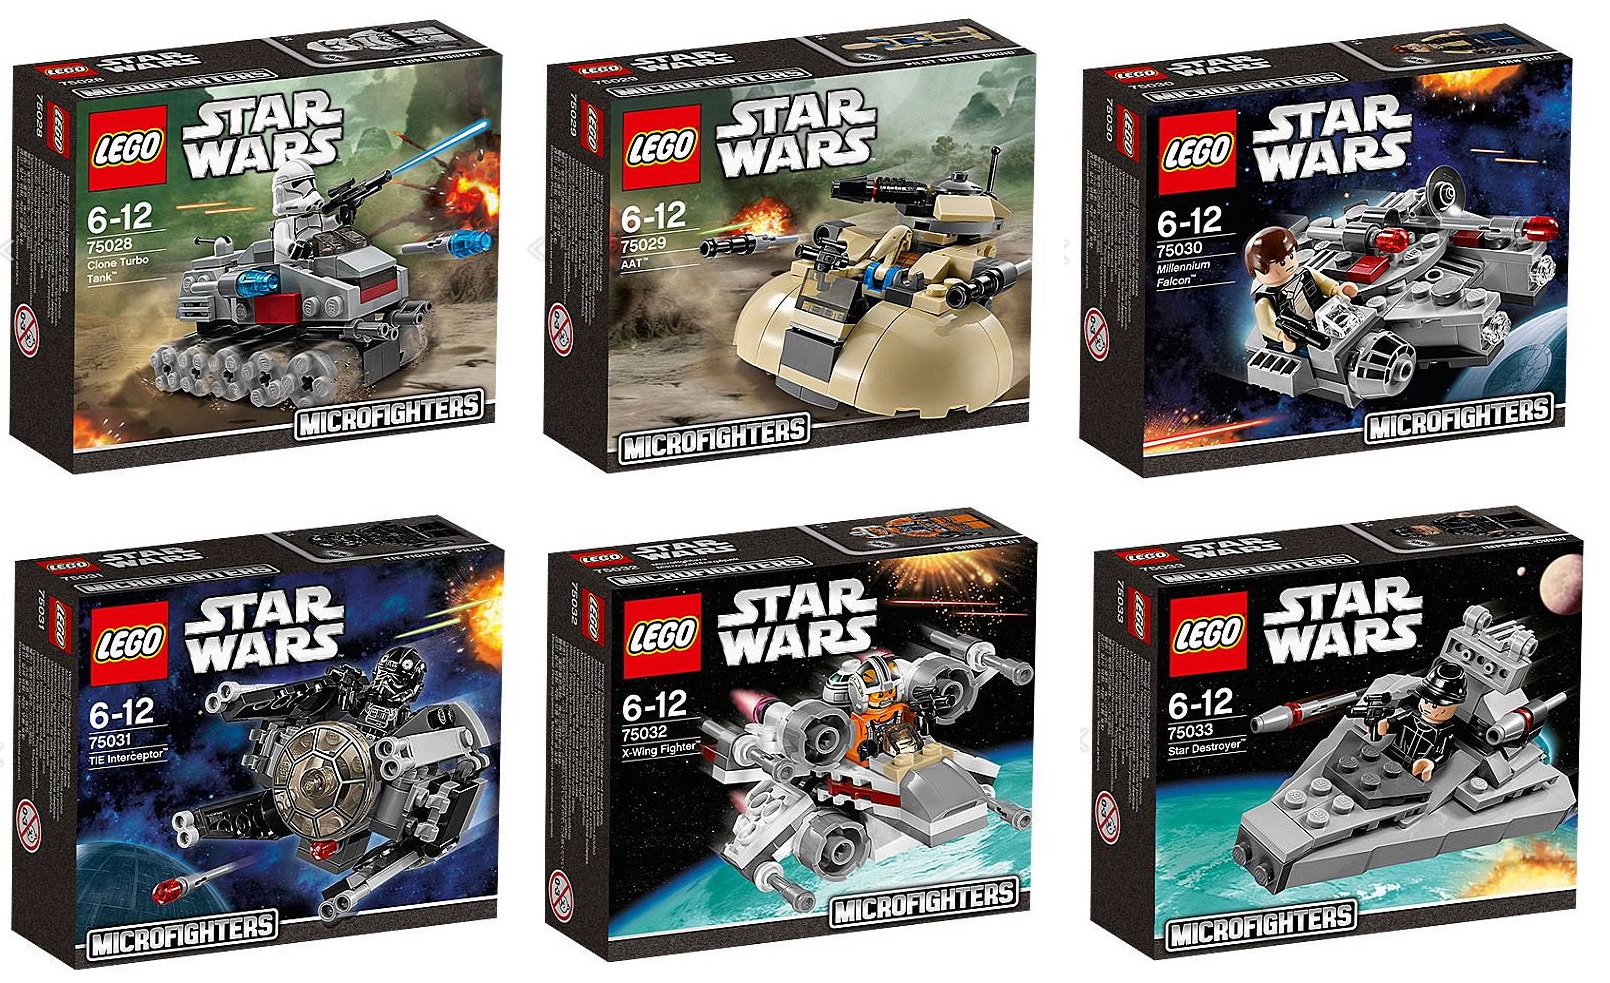 LEGO-Star-Wars-Microfighters-75028-75029-75030-75031-75032-75033.jpg